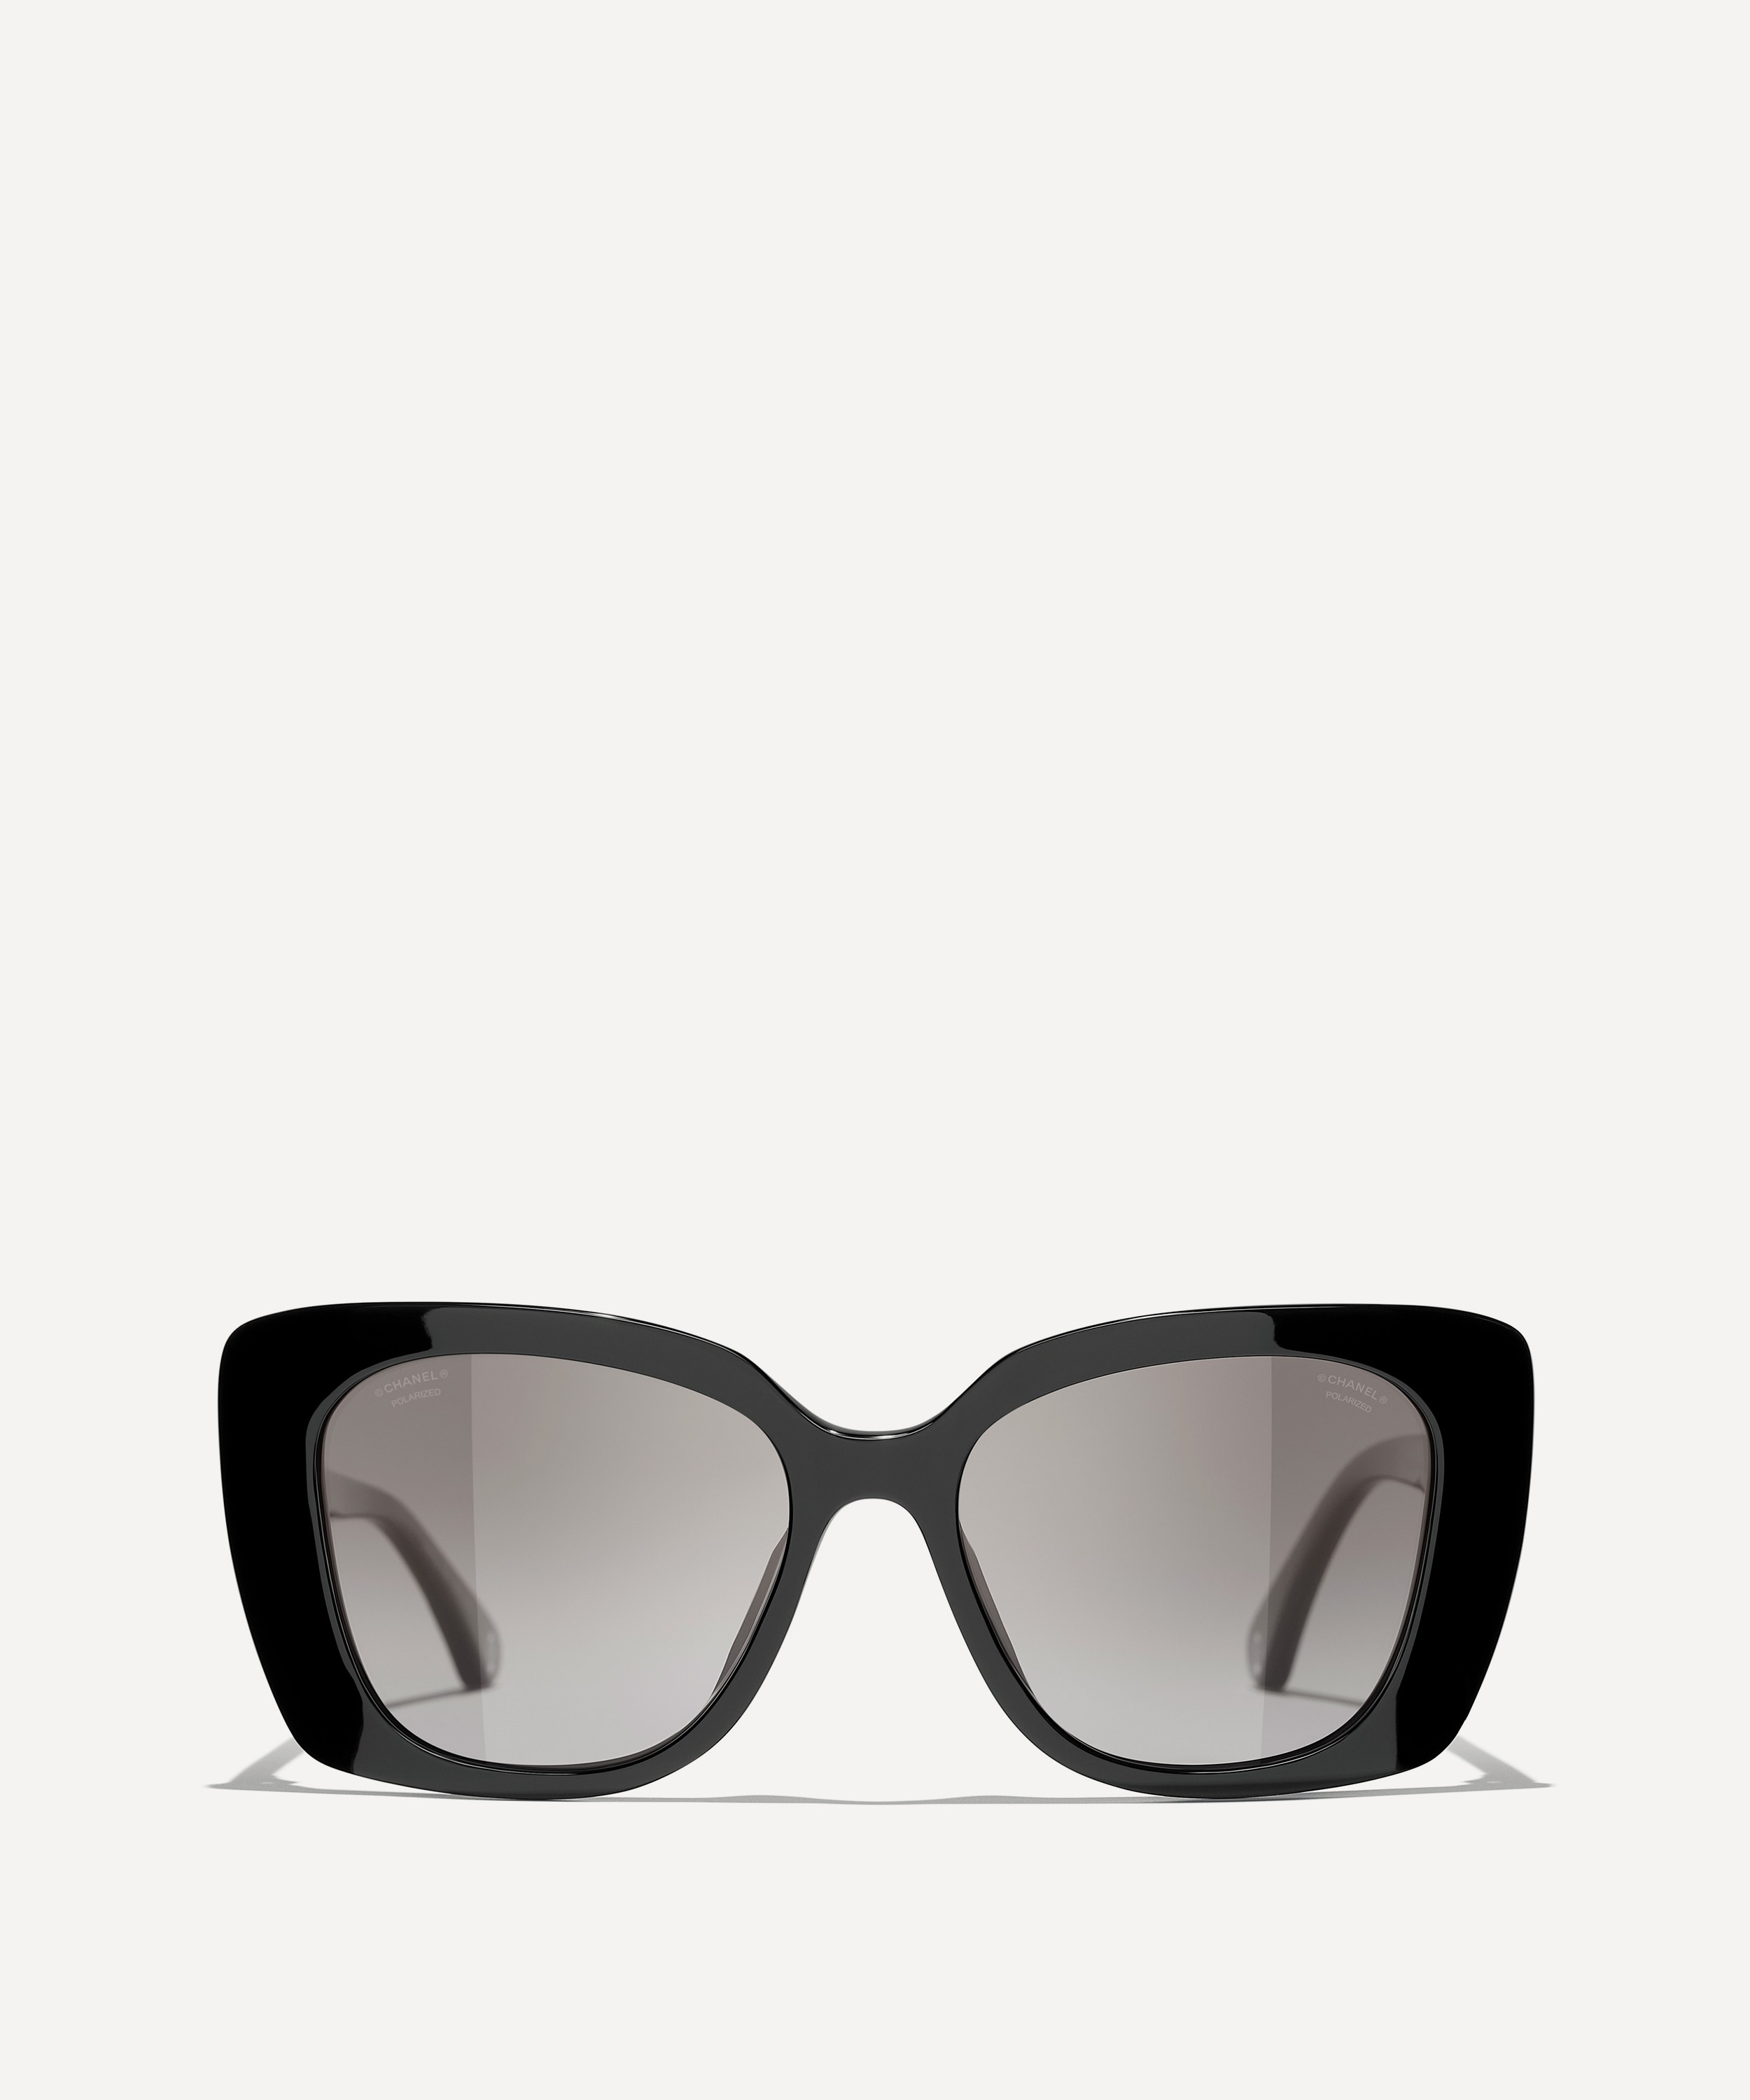 chanel black white sunglasses womens